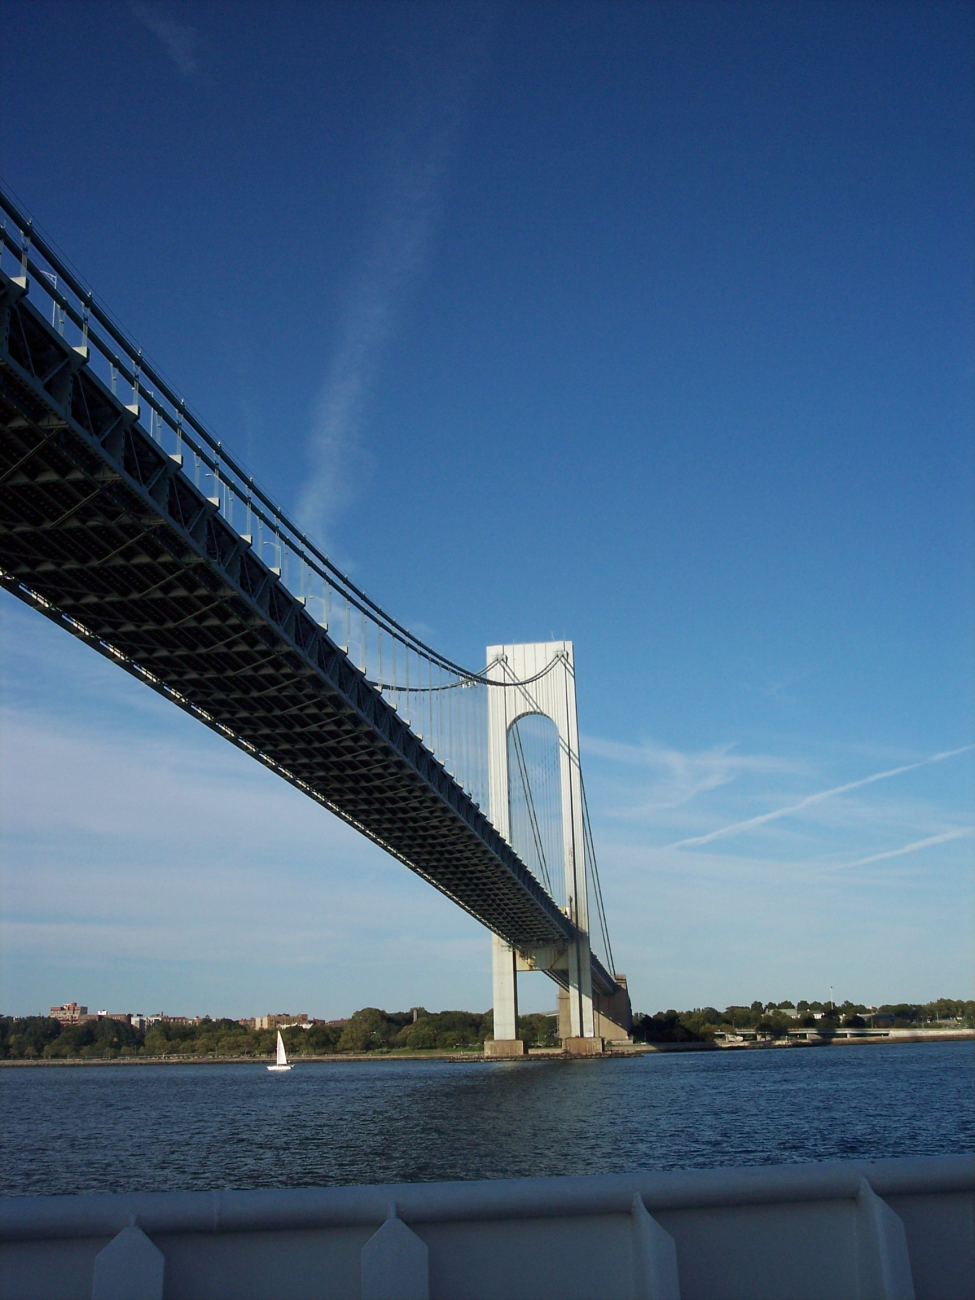 Verrazano-Narrows Bridge spanning the Hudson River looking east tothe Brooklyn shore